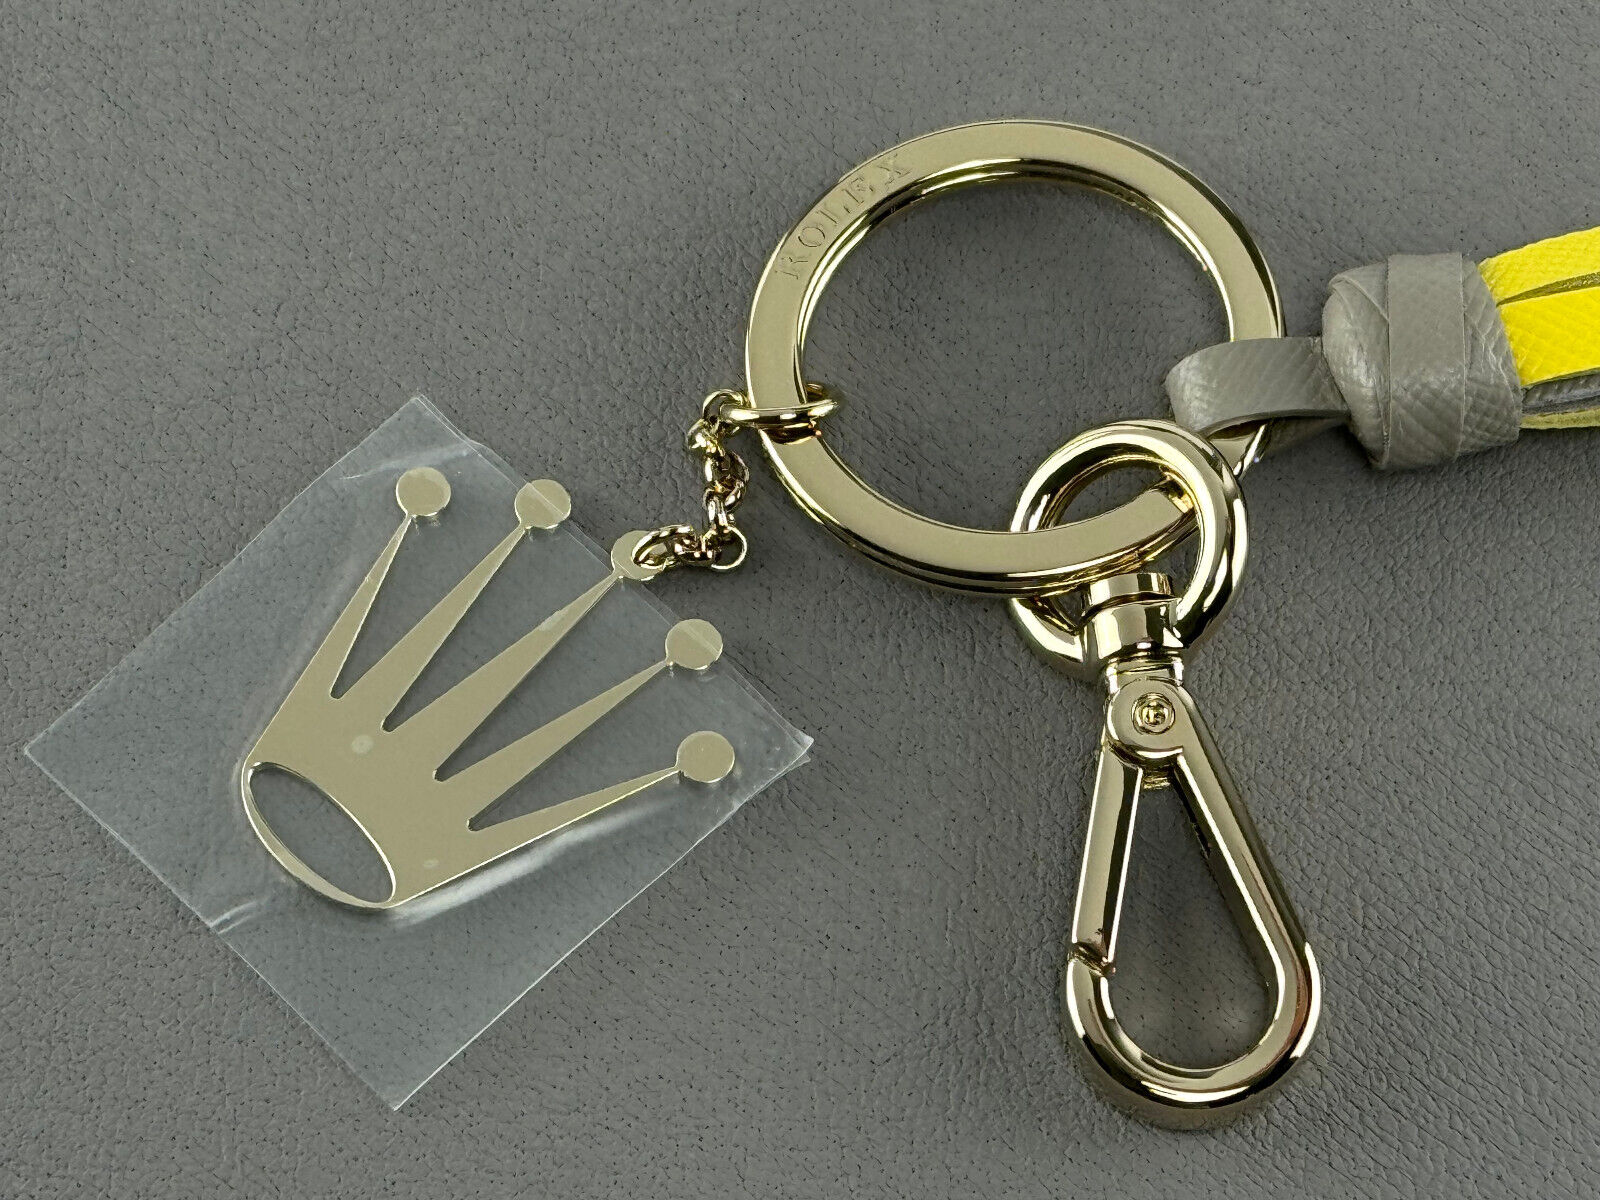 Rolex Schlüsselanhänger Anhänger keyring keychain key holder Gelb Edelstahl yellow